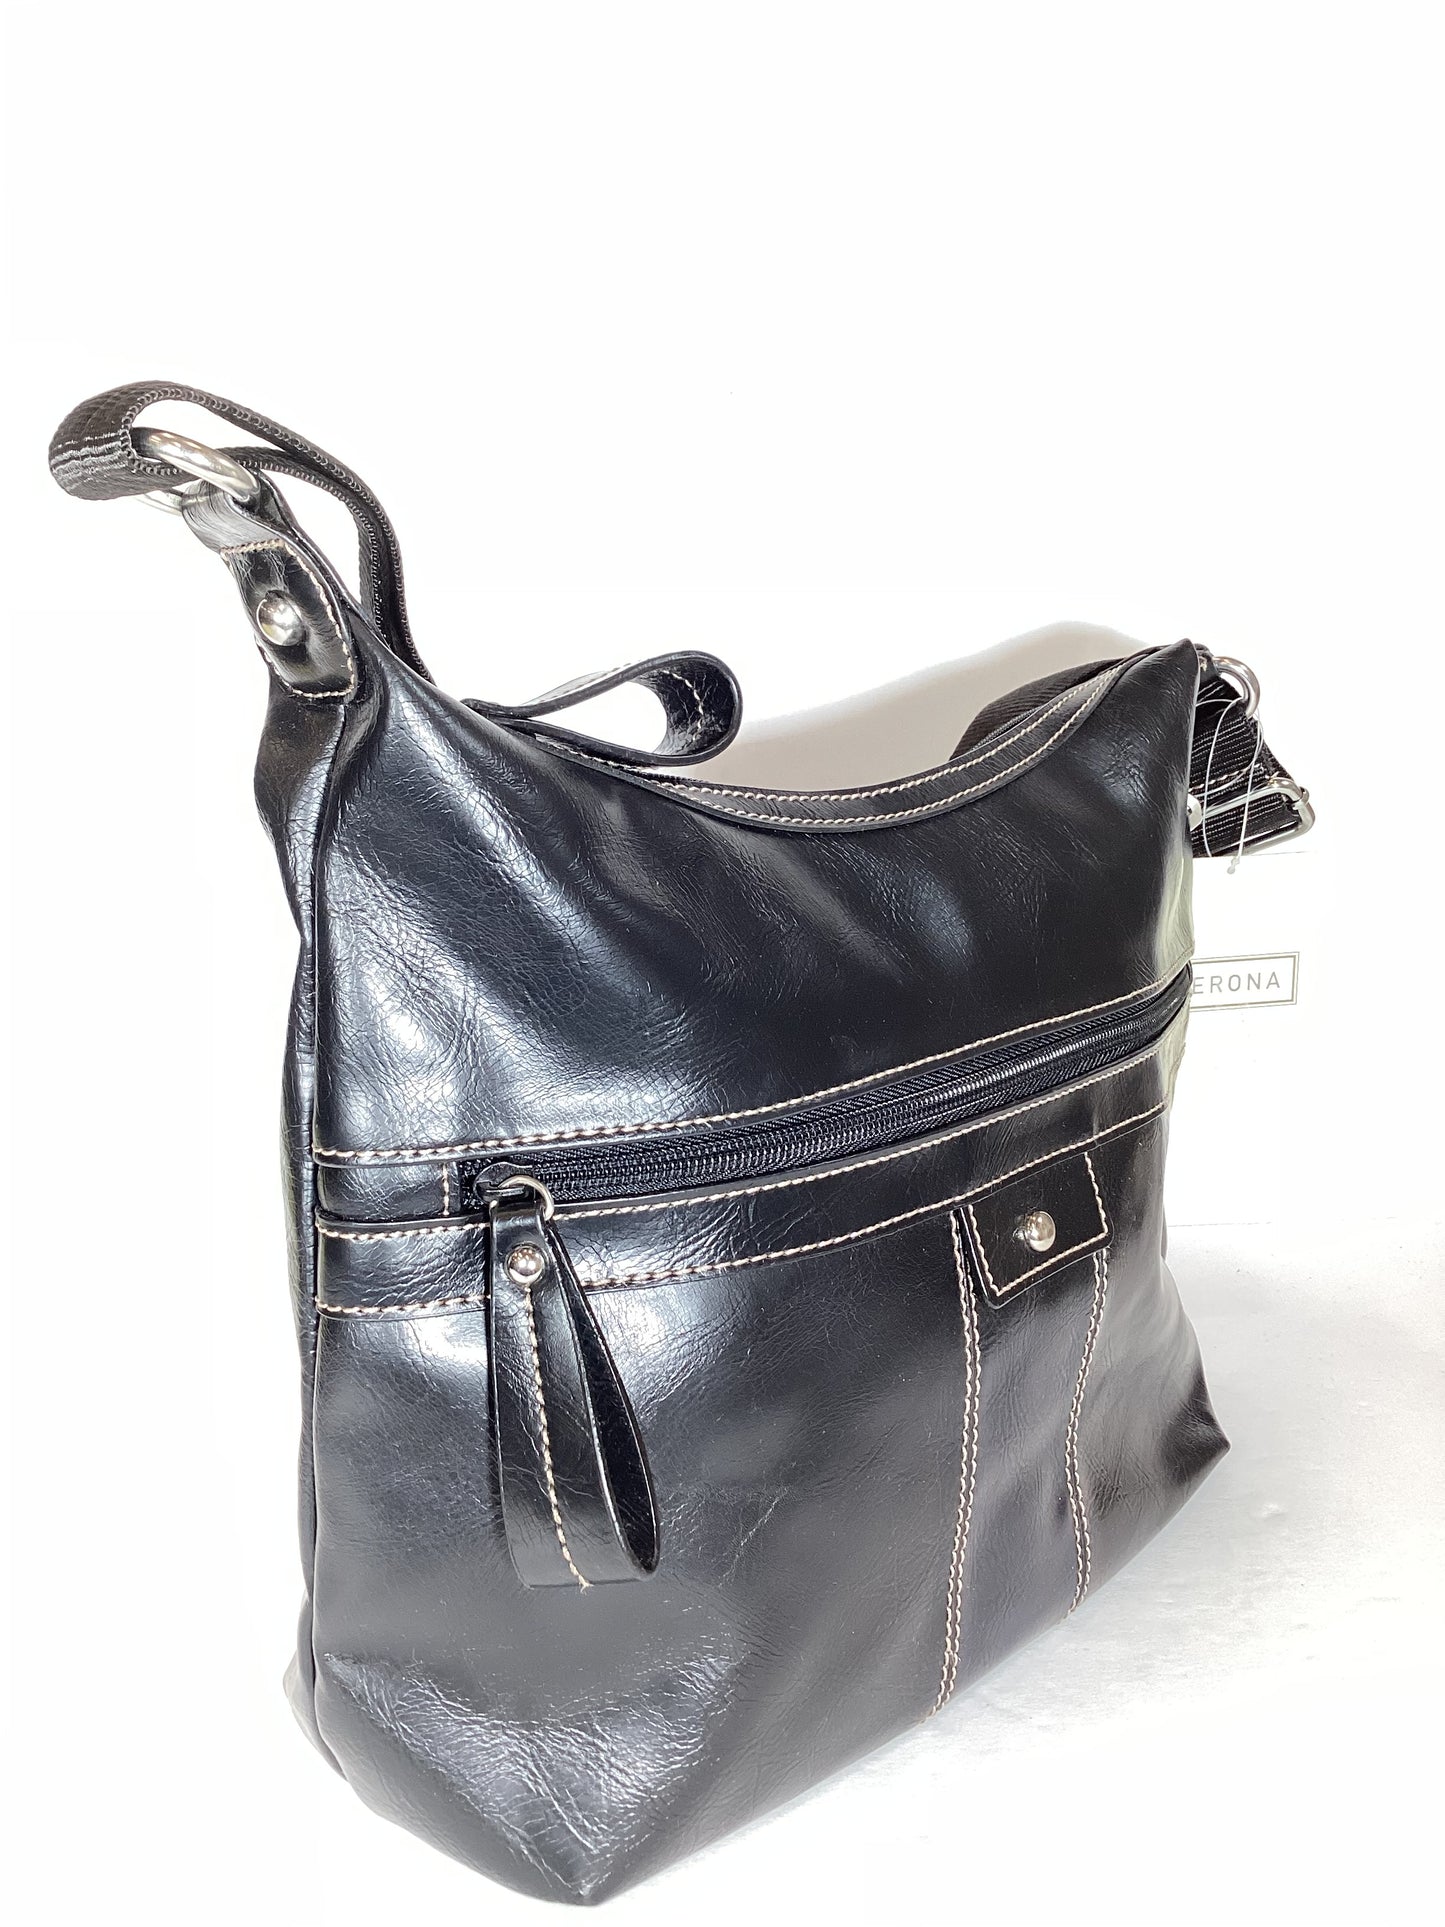 Handbag By Merona  Size: Large